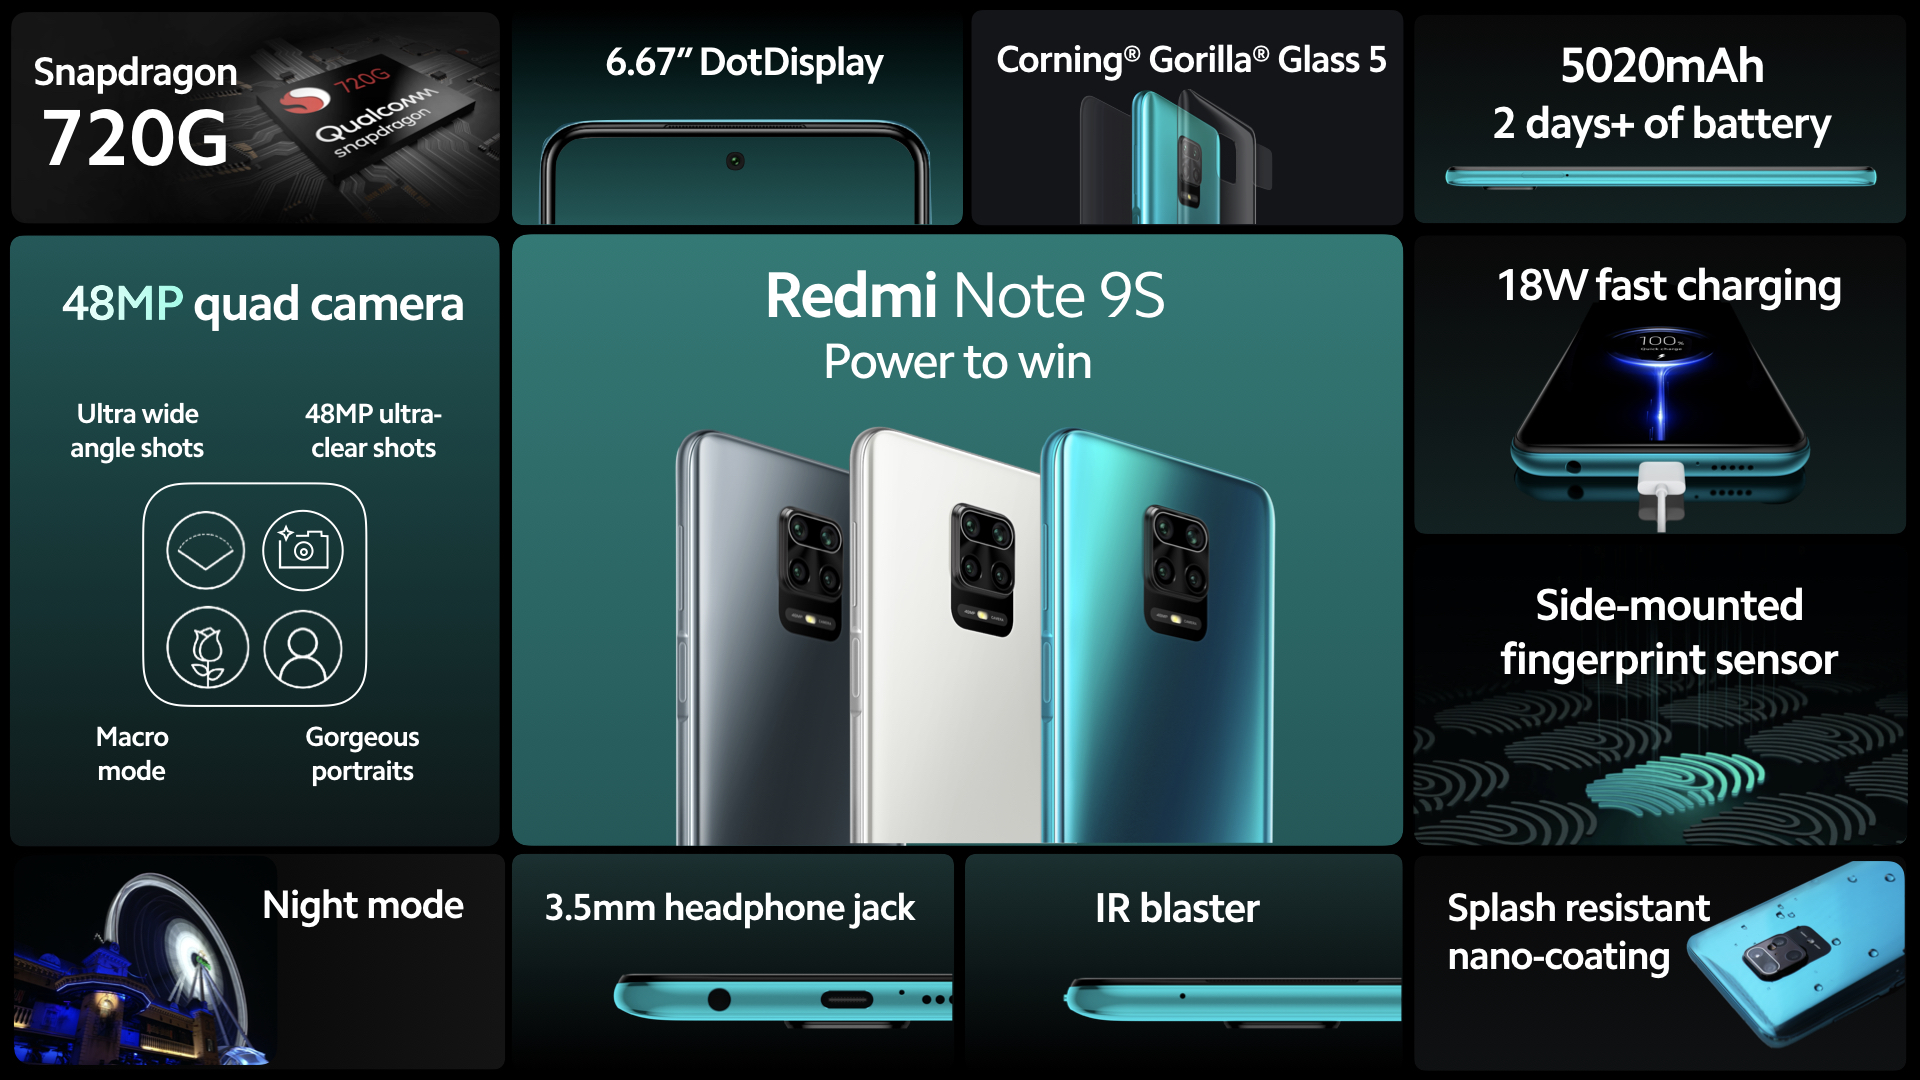 Redmi Note Pro Характеристик Цена